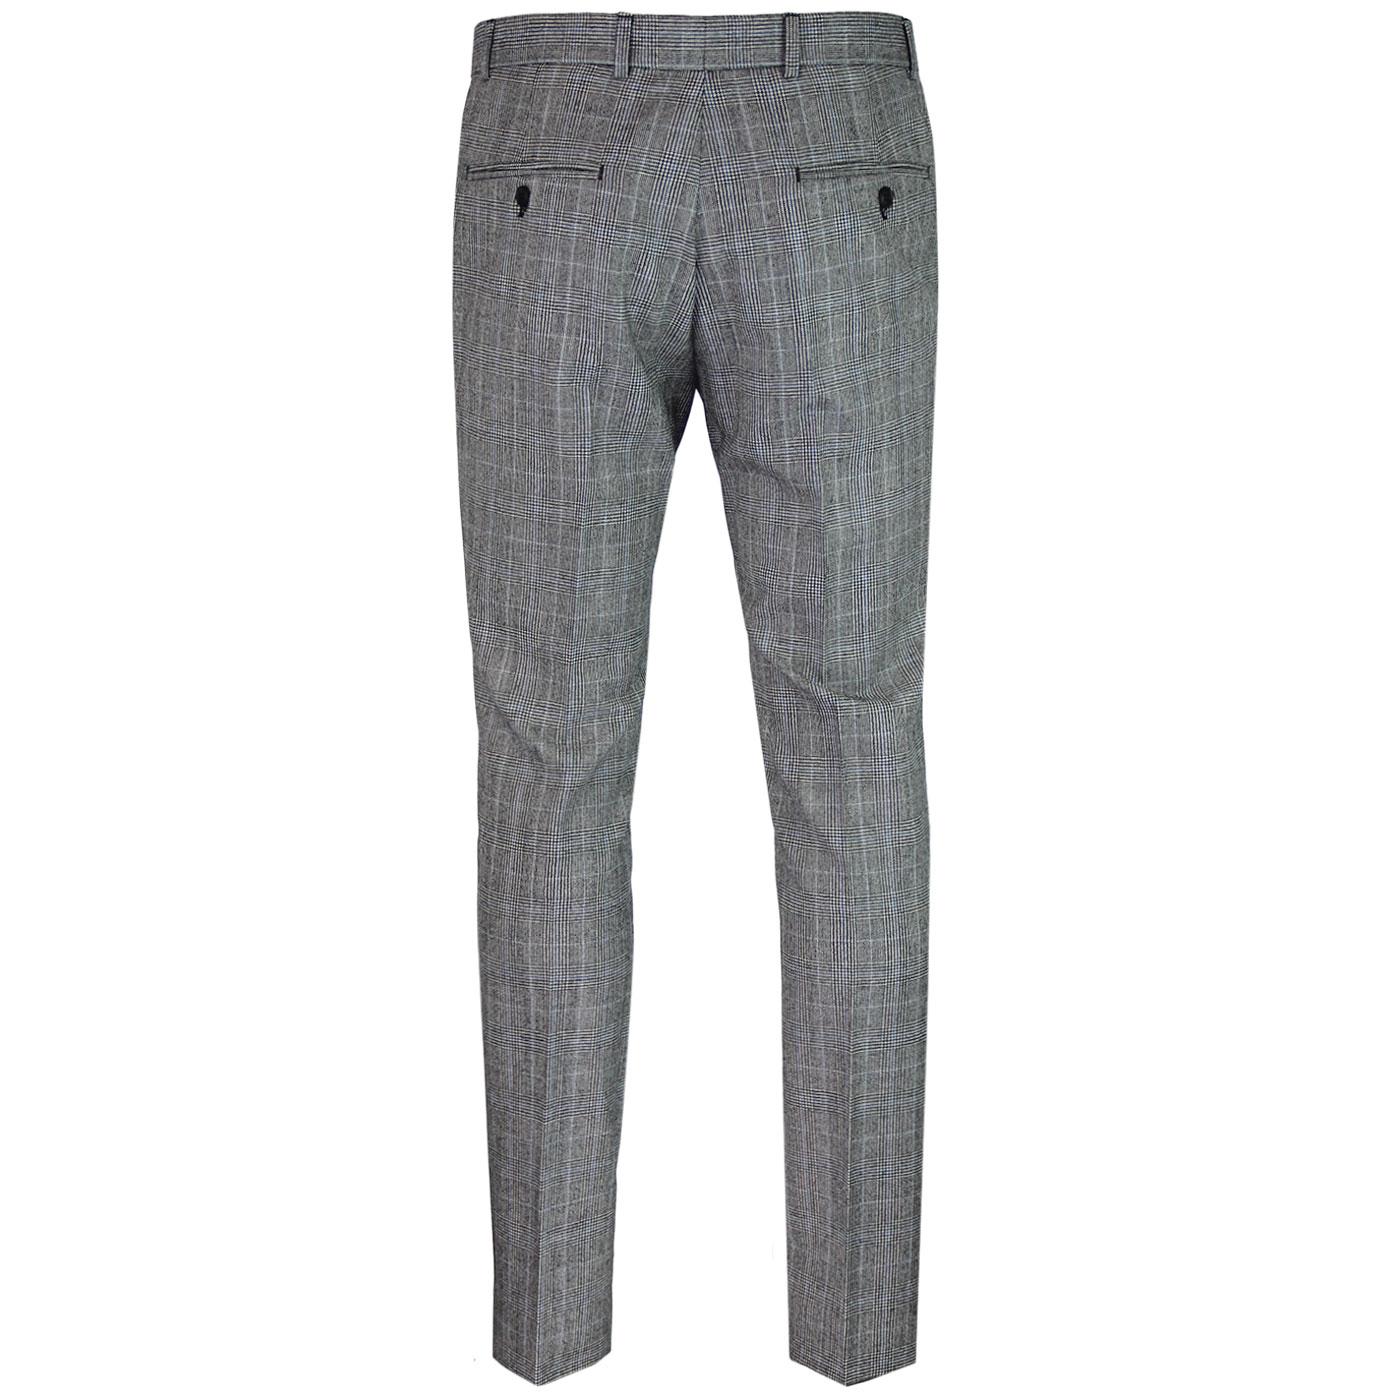 BEN SHERMAN Tailoring 60s Mod POW Check Suit Trousers